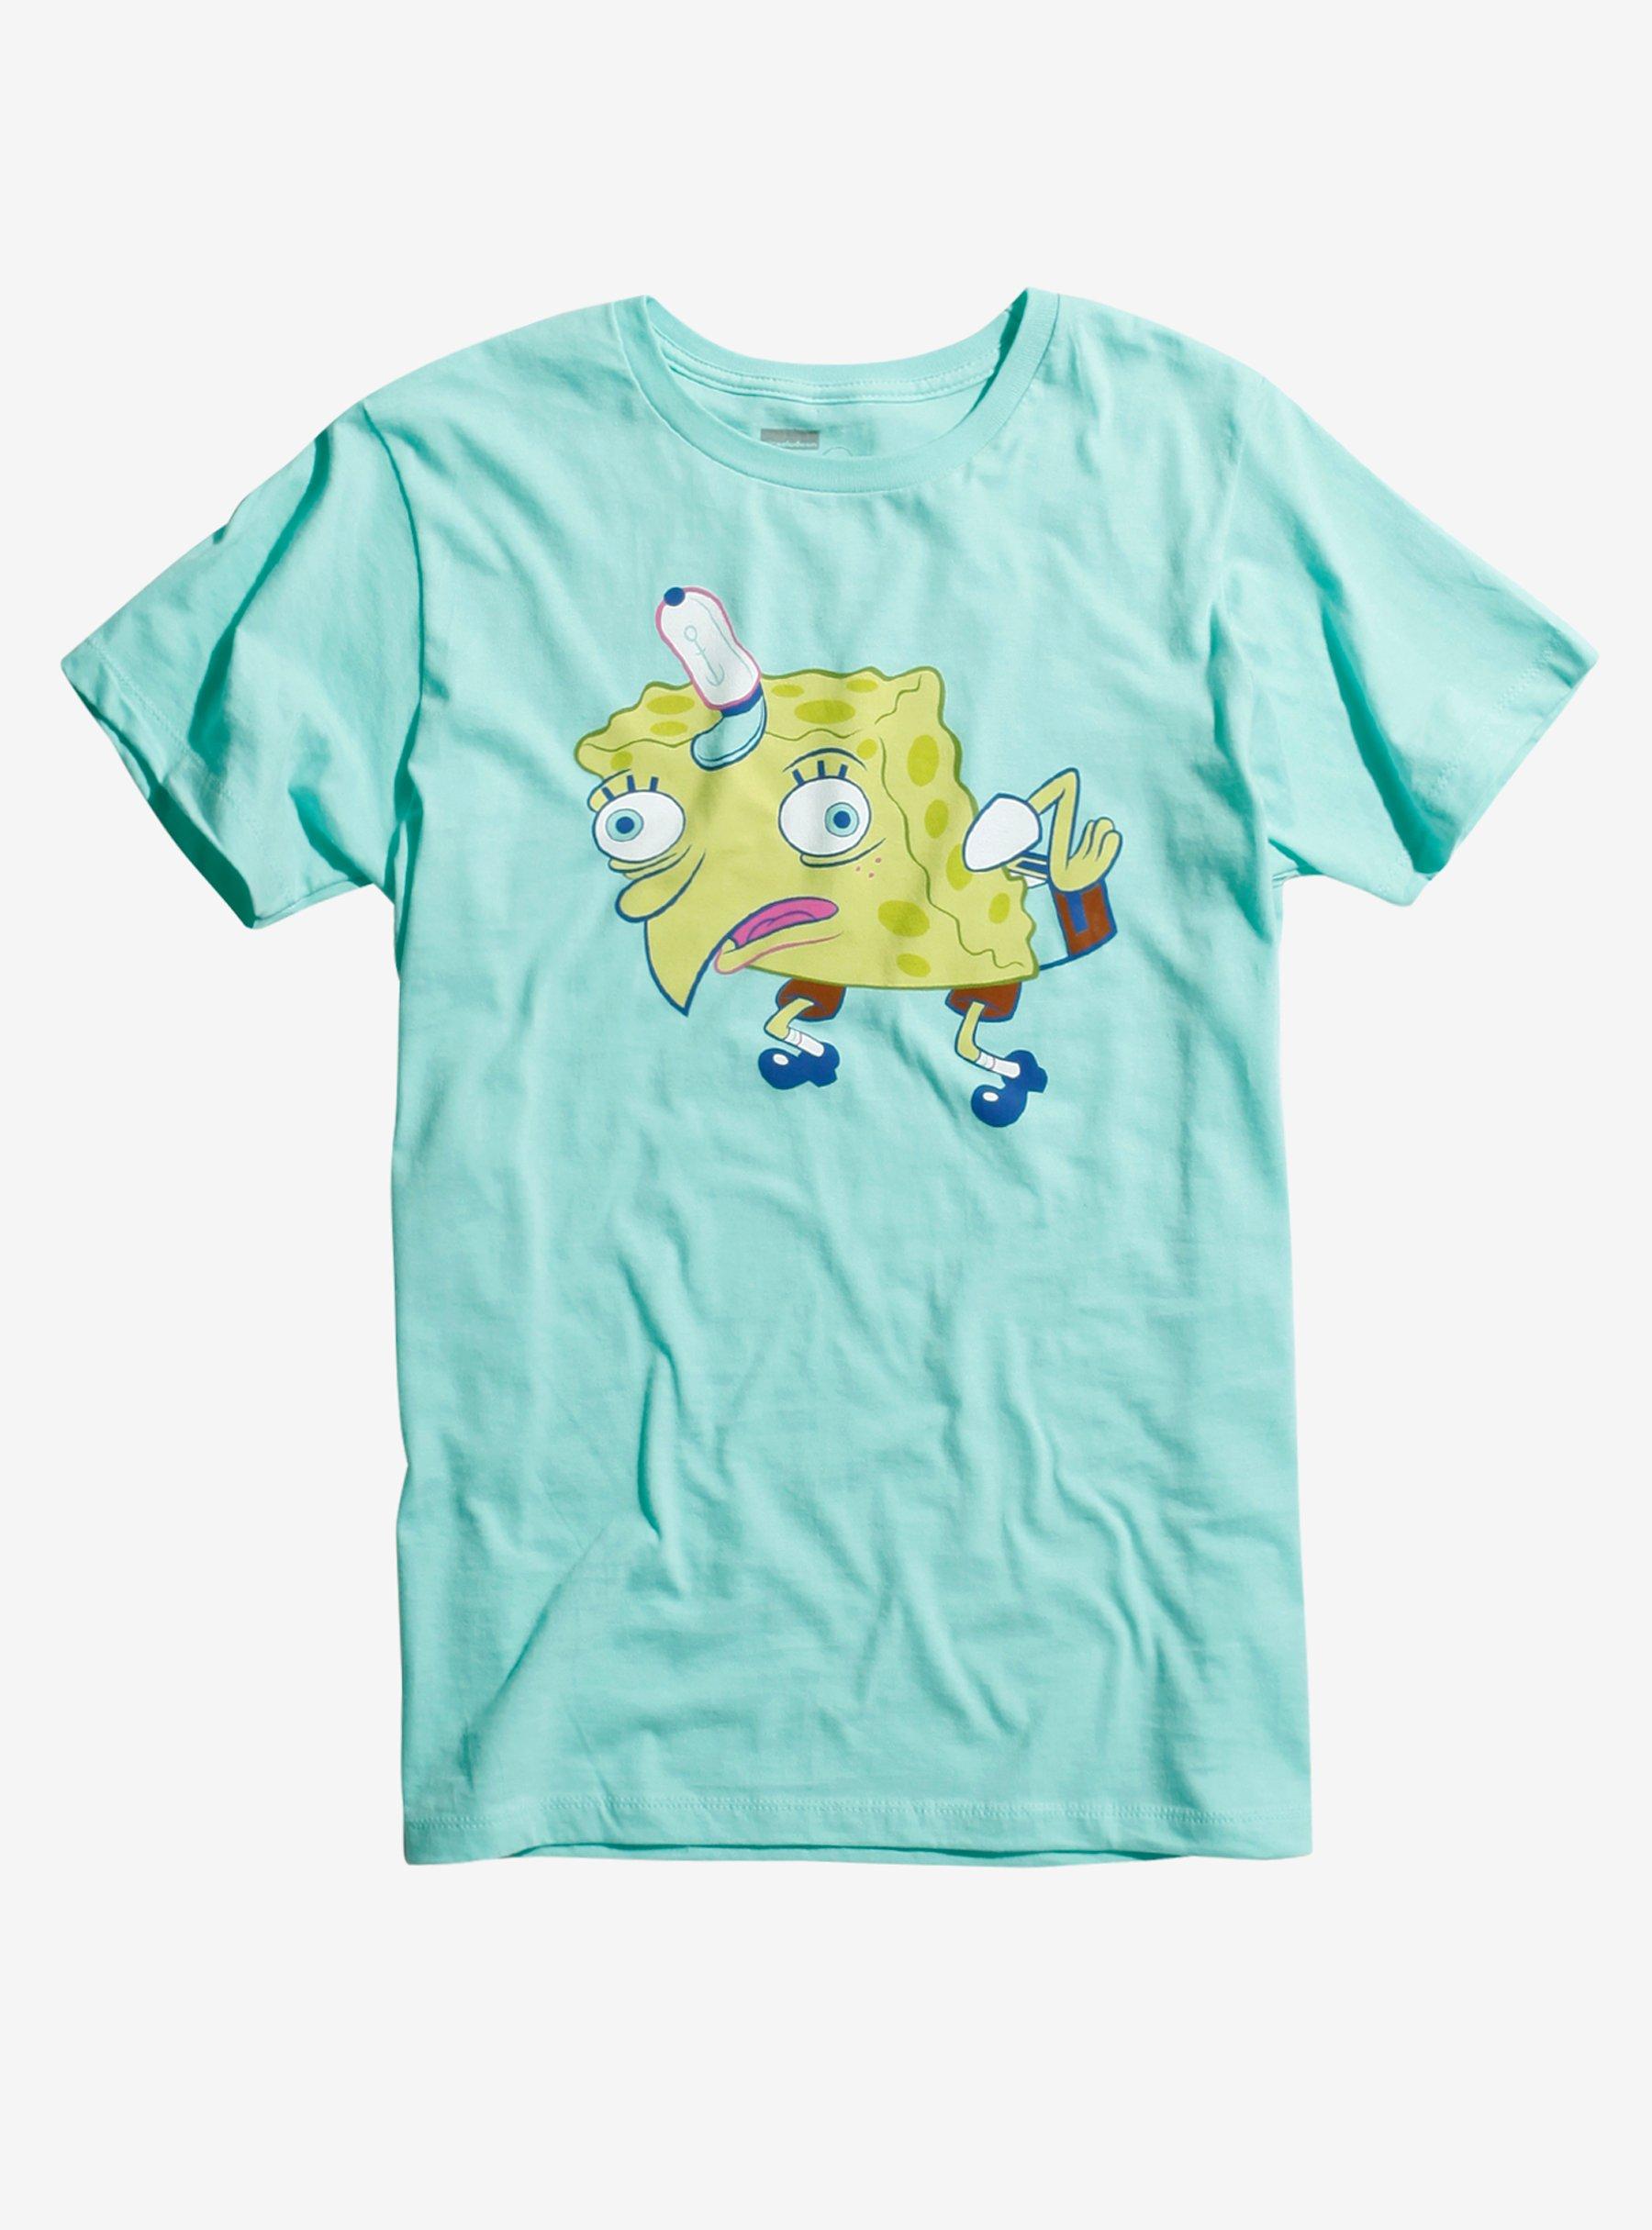 SpongeBob SquarePants Chicken T-Shirt | Hot Topic